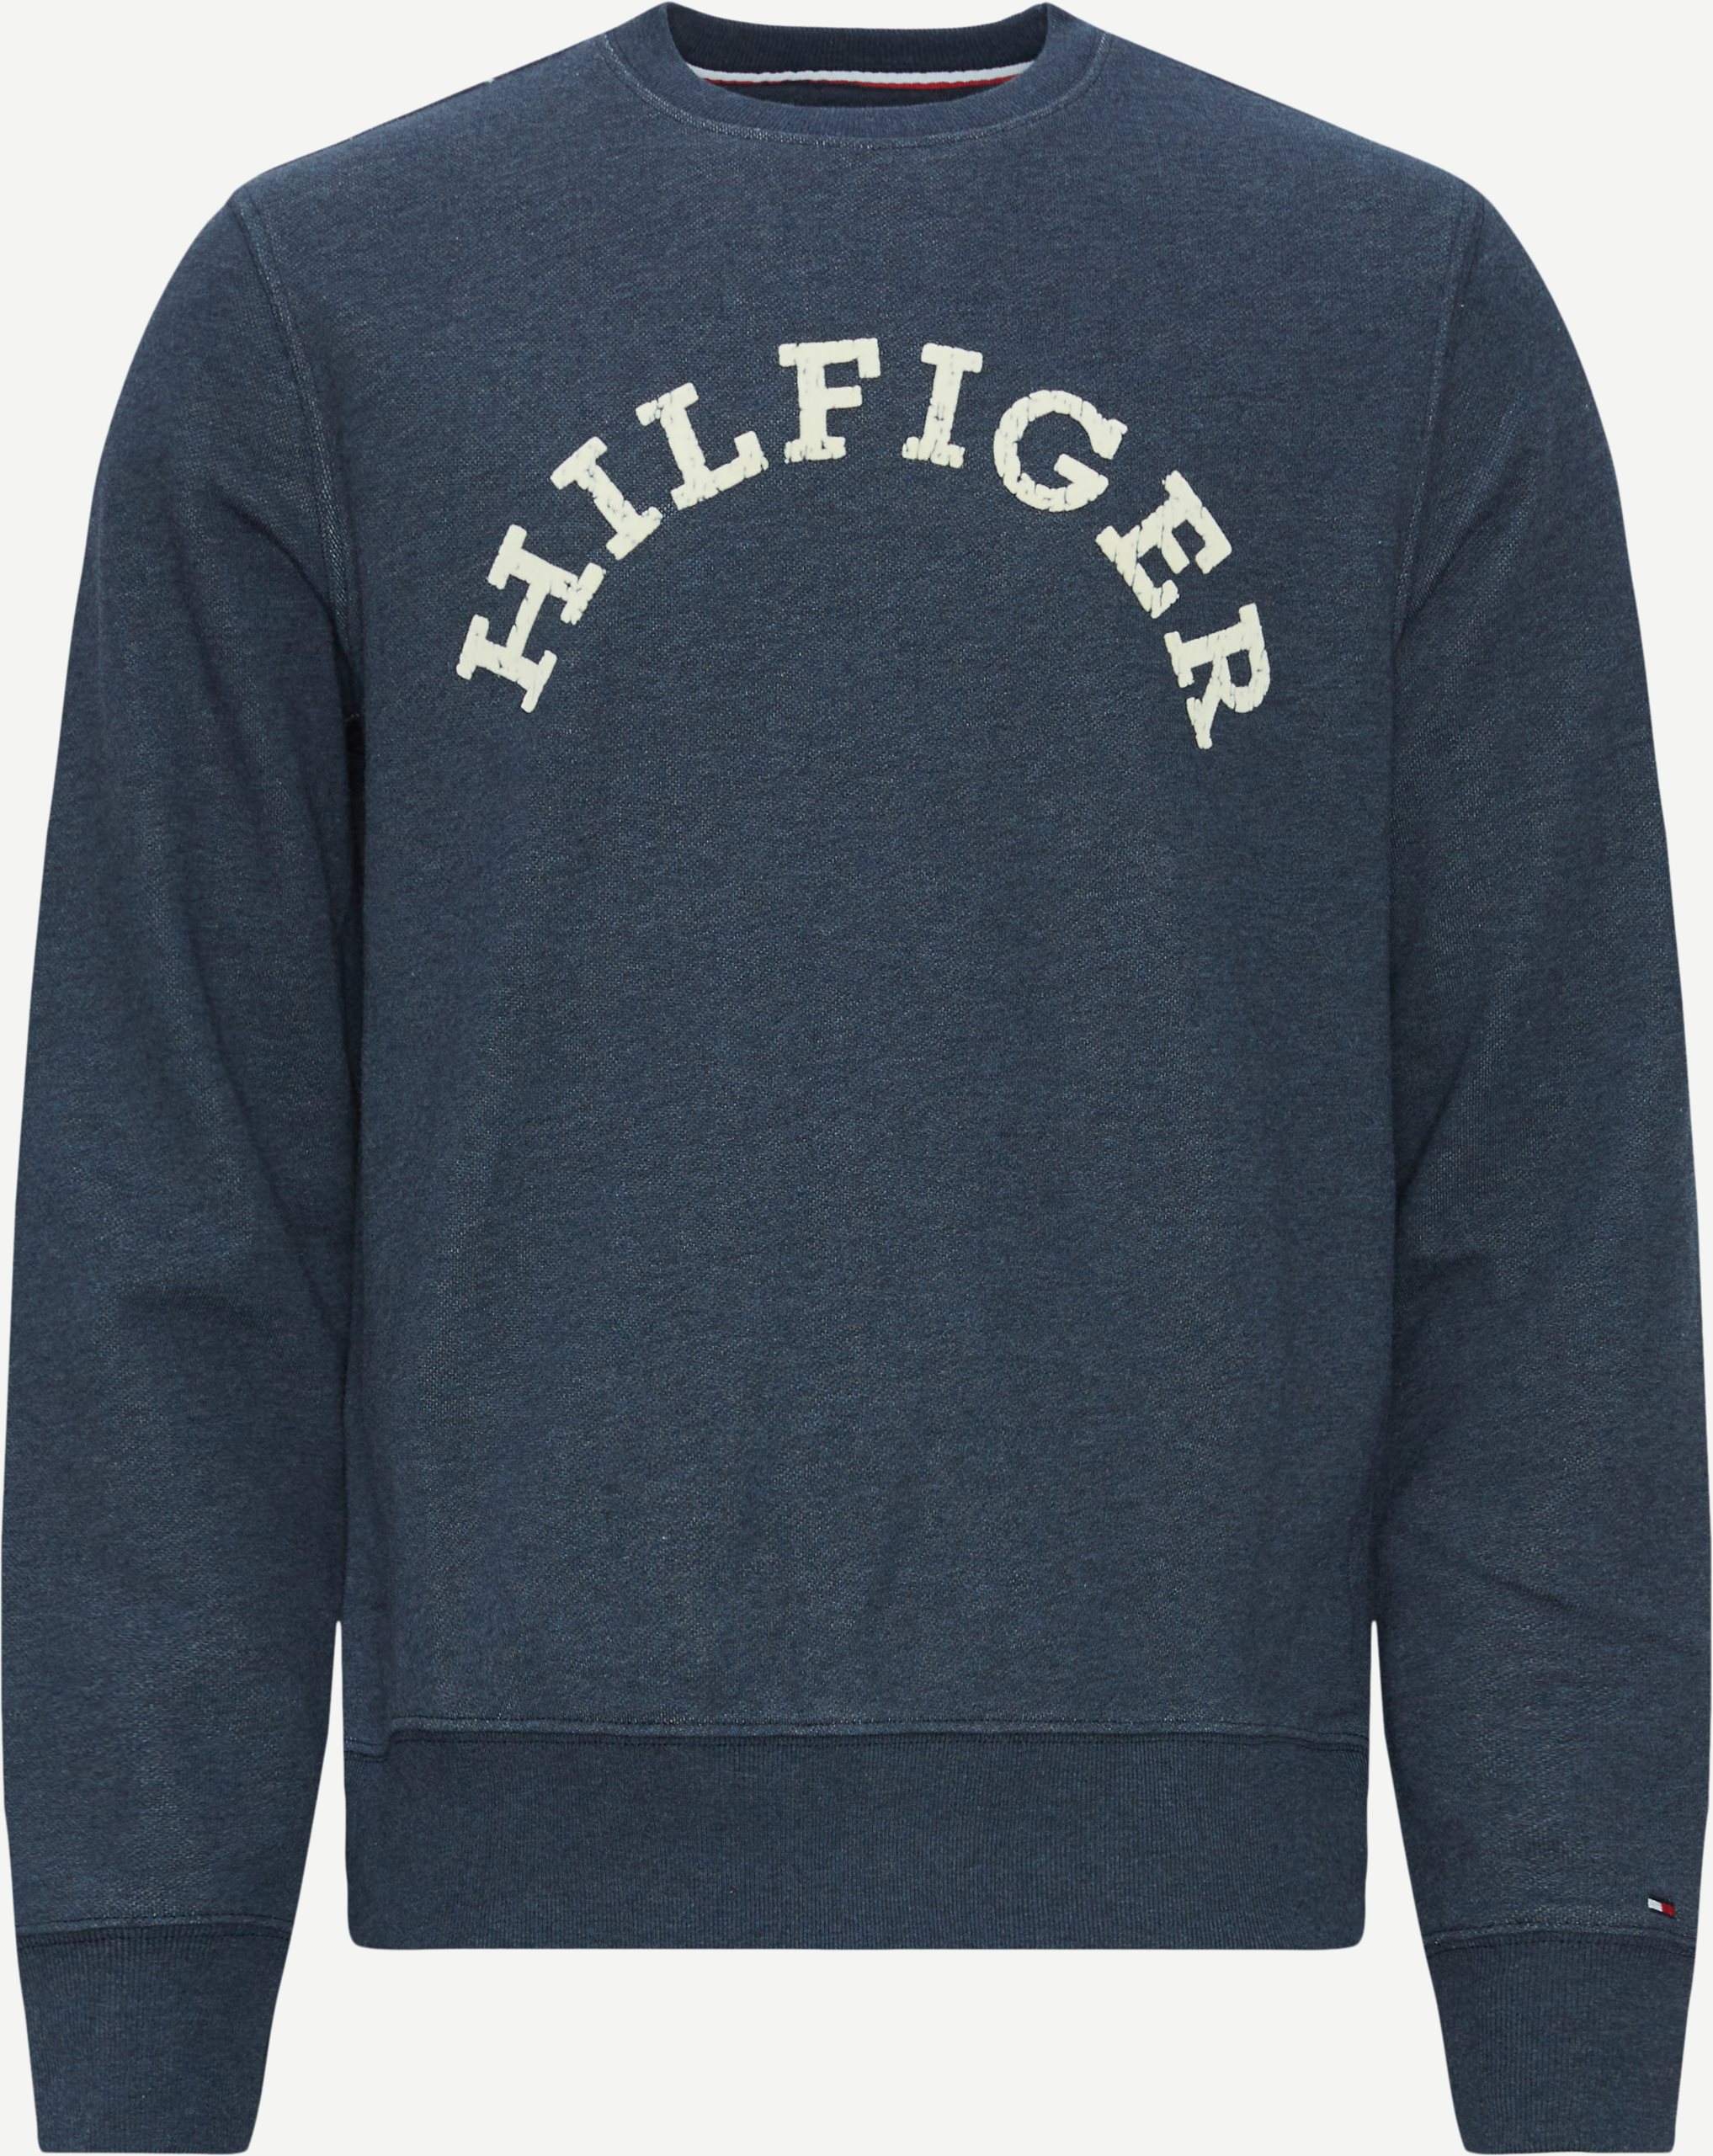 Tommy Hilfiger Sweatshirts 34448 HILFIGER ARCHED HTR SWEATSHIRT Blue